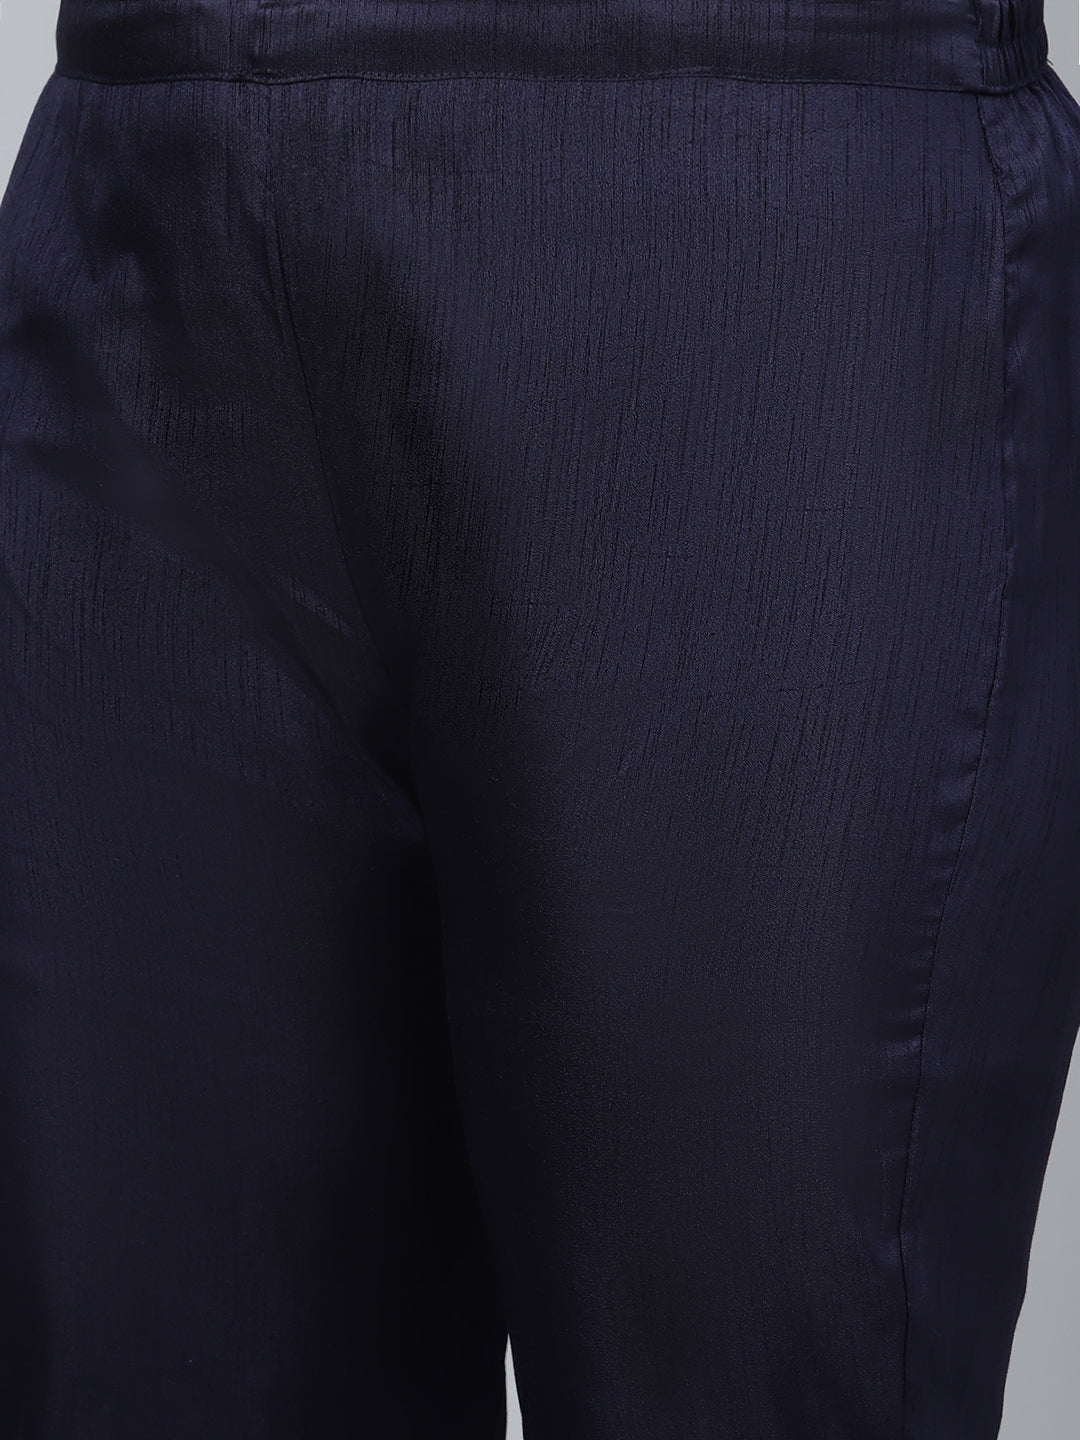 Women's Navy Blue Printed Kurta With Pant Set by Ziyaa- (2pcs set)